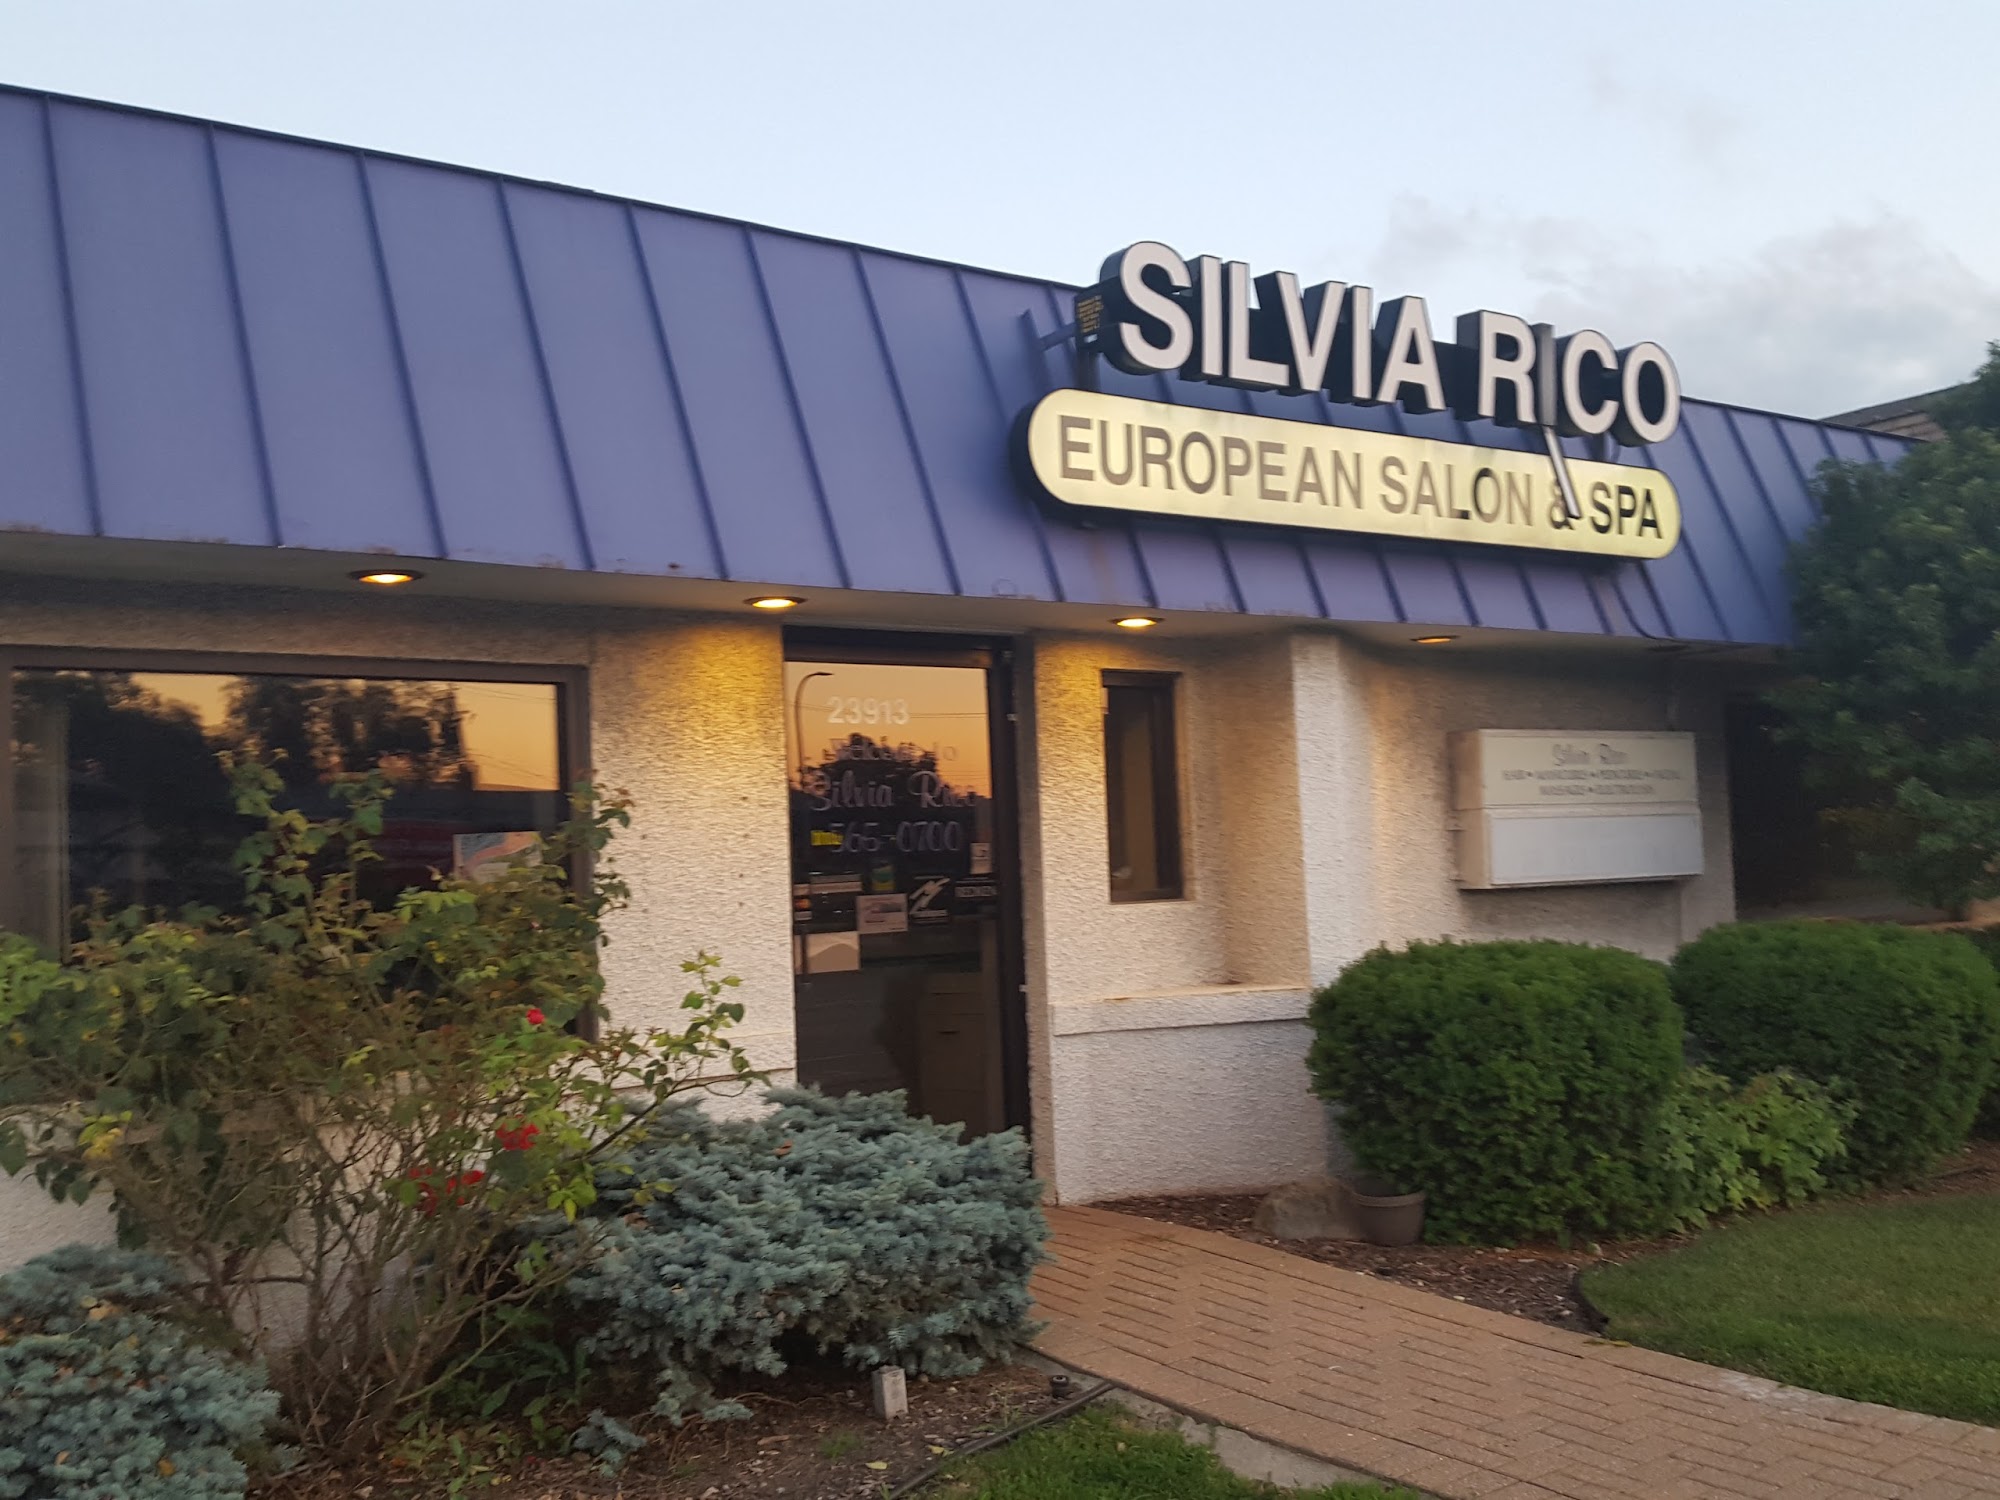 Silvia Rico European Salon